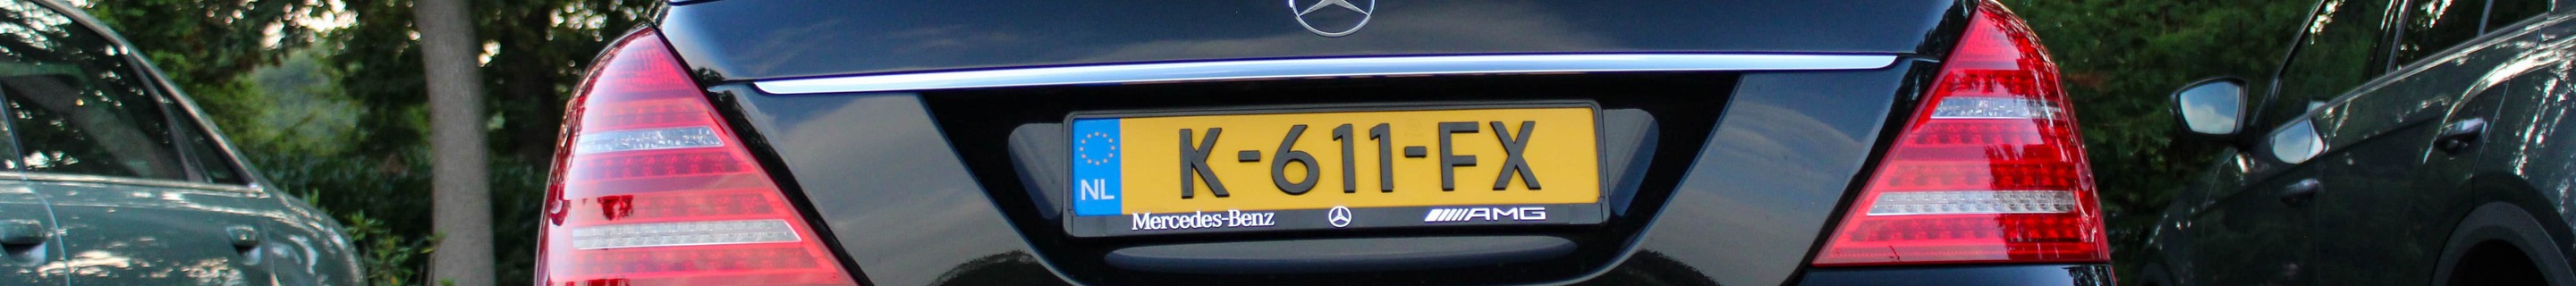 Mercedes-Benz Väth V63 RS S